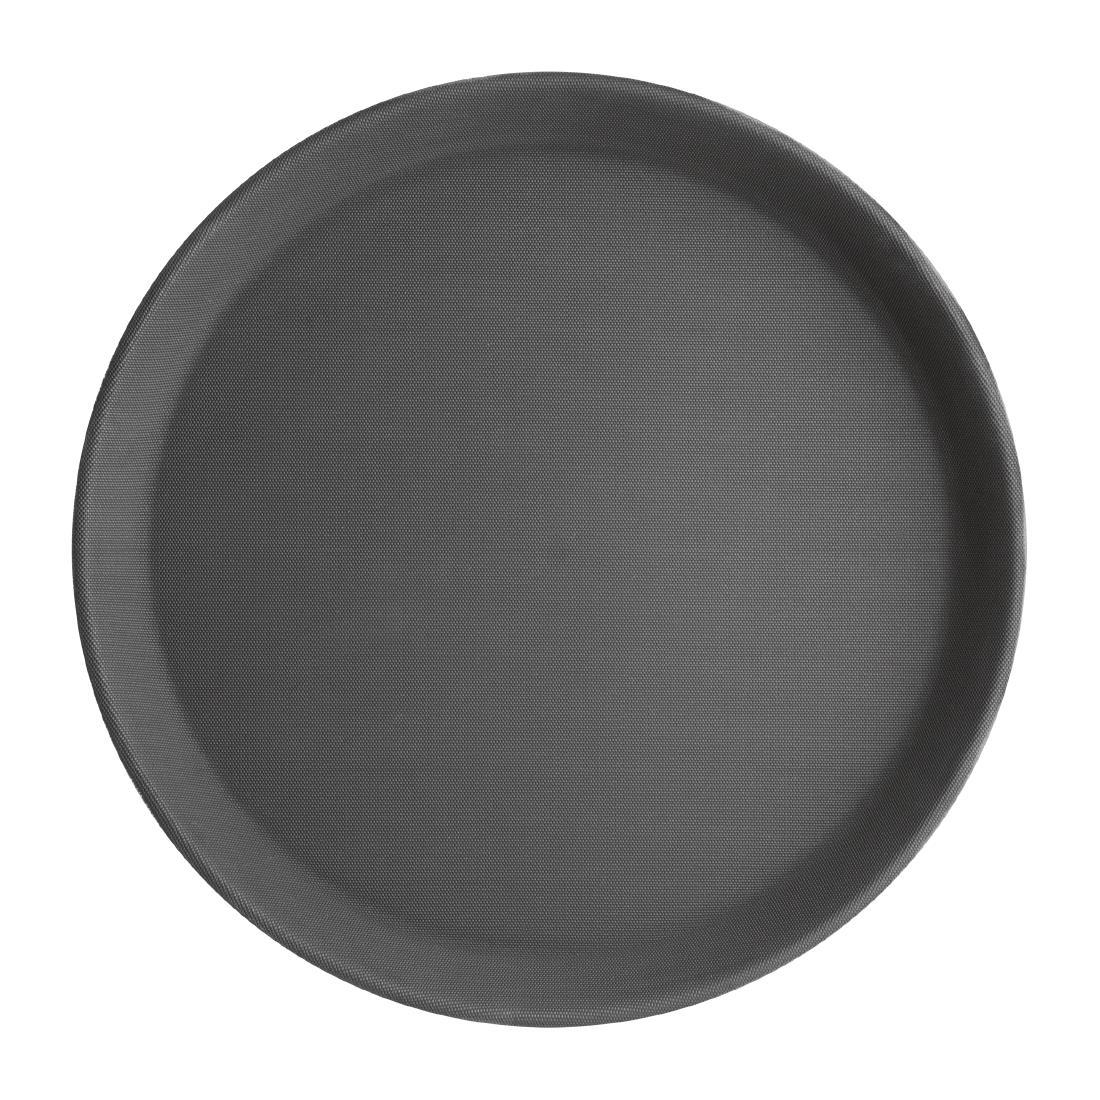 Olympia Kristallon Fibreglass Round Non-Slip Tray Black 280mm - J845  - 1